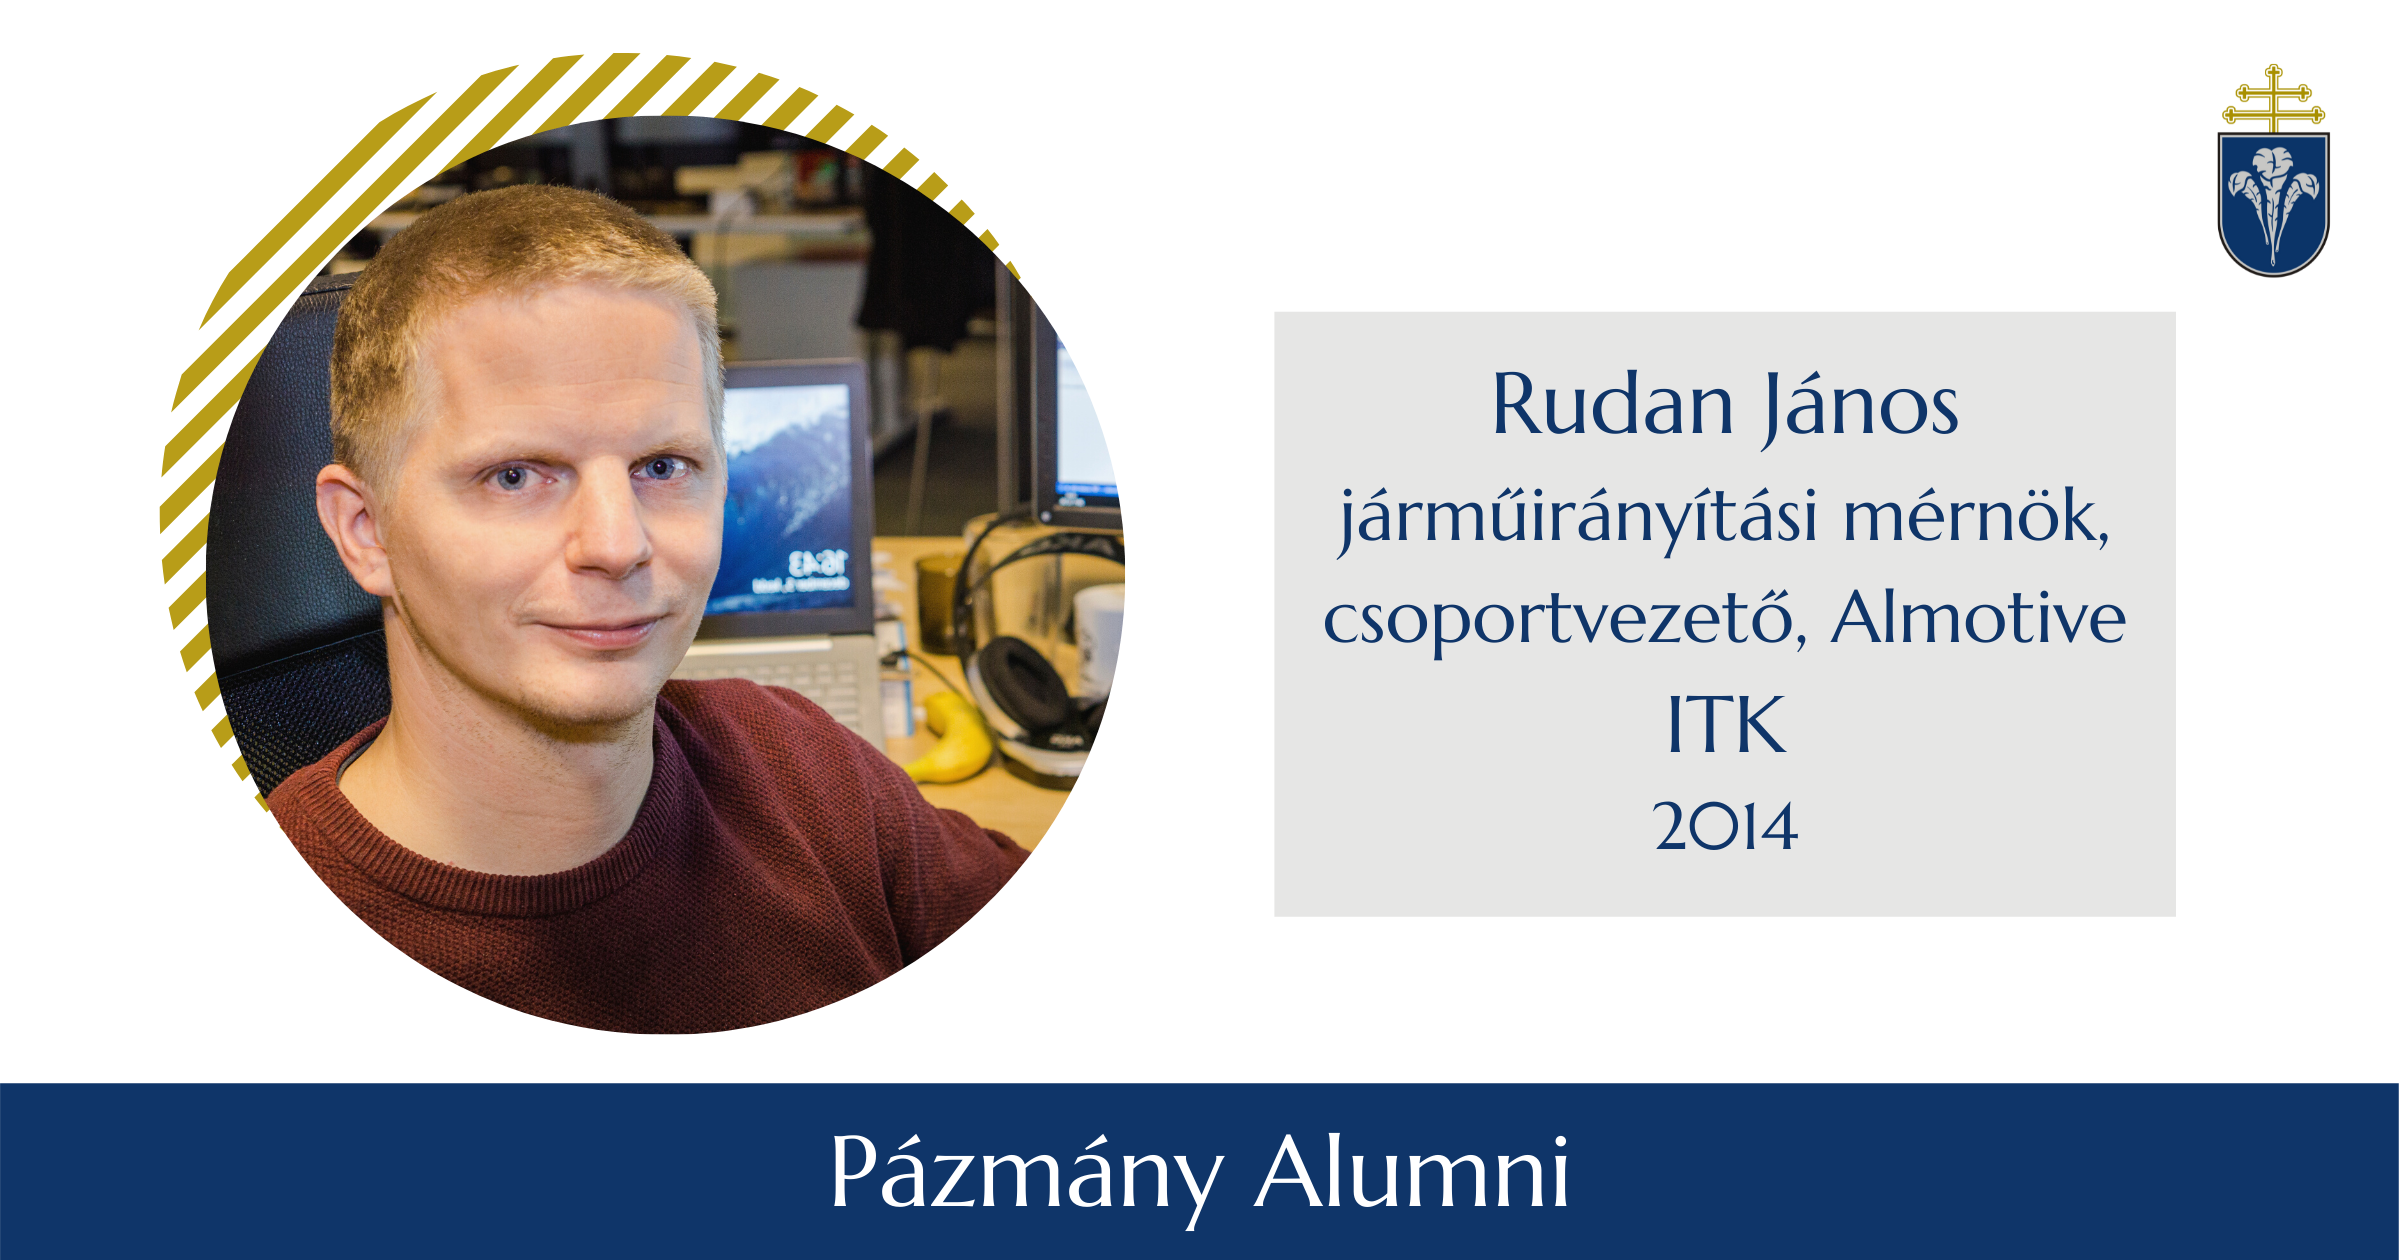 pazmany_alumni_rudan_janos.png